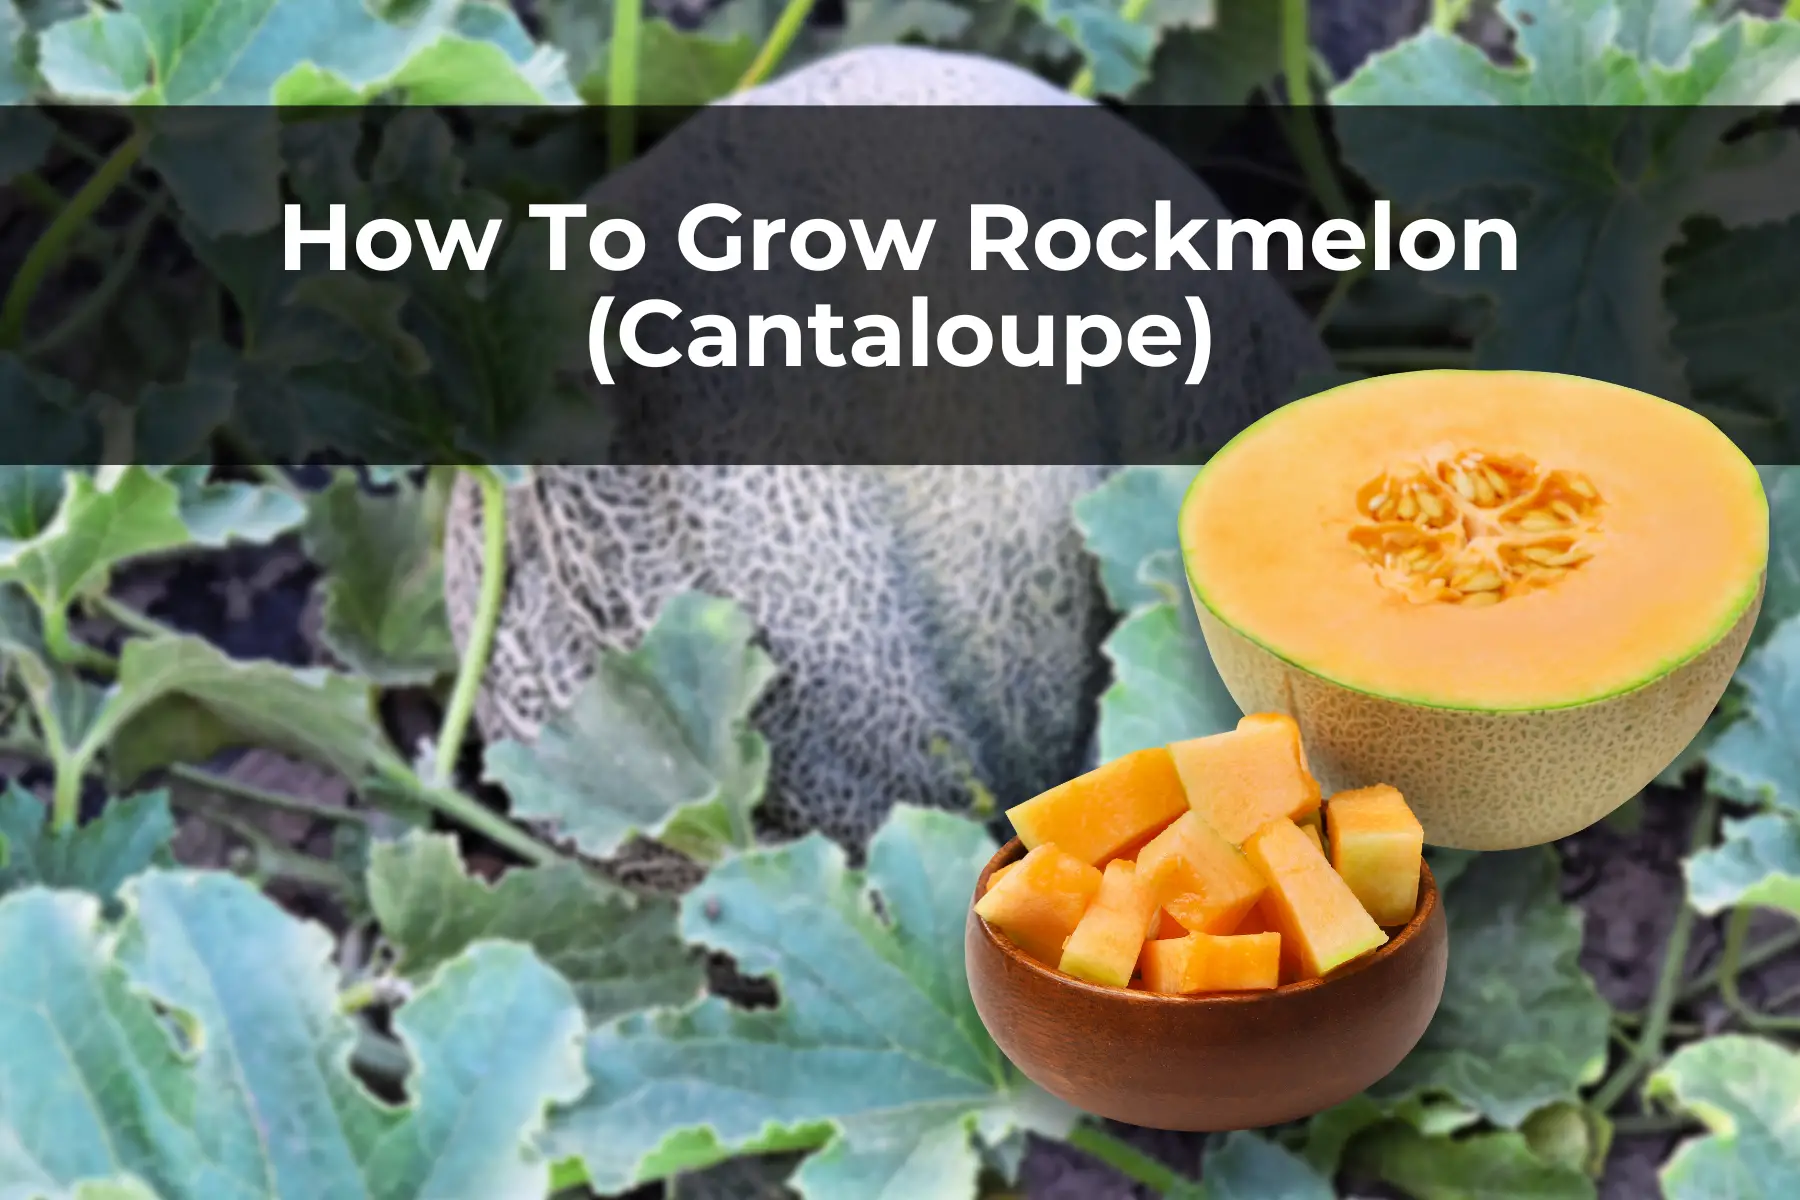 How To Grow Rockmelon (Cantaloupe)